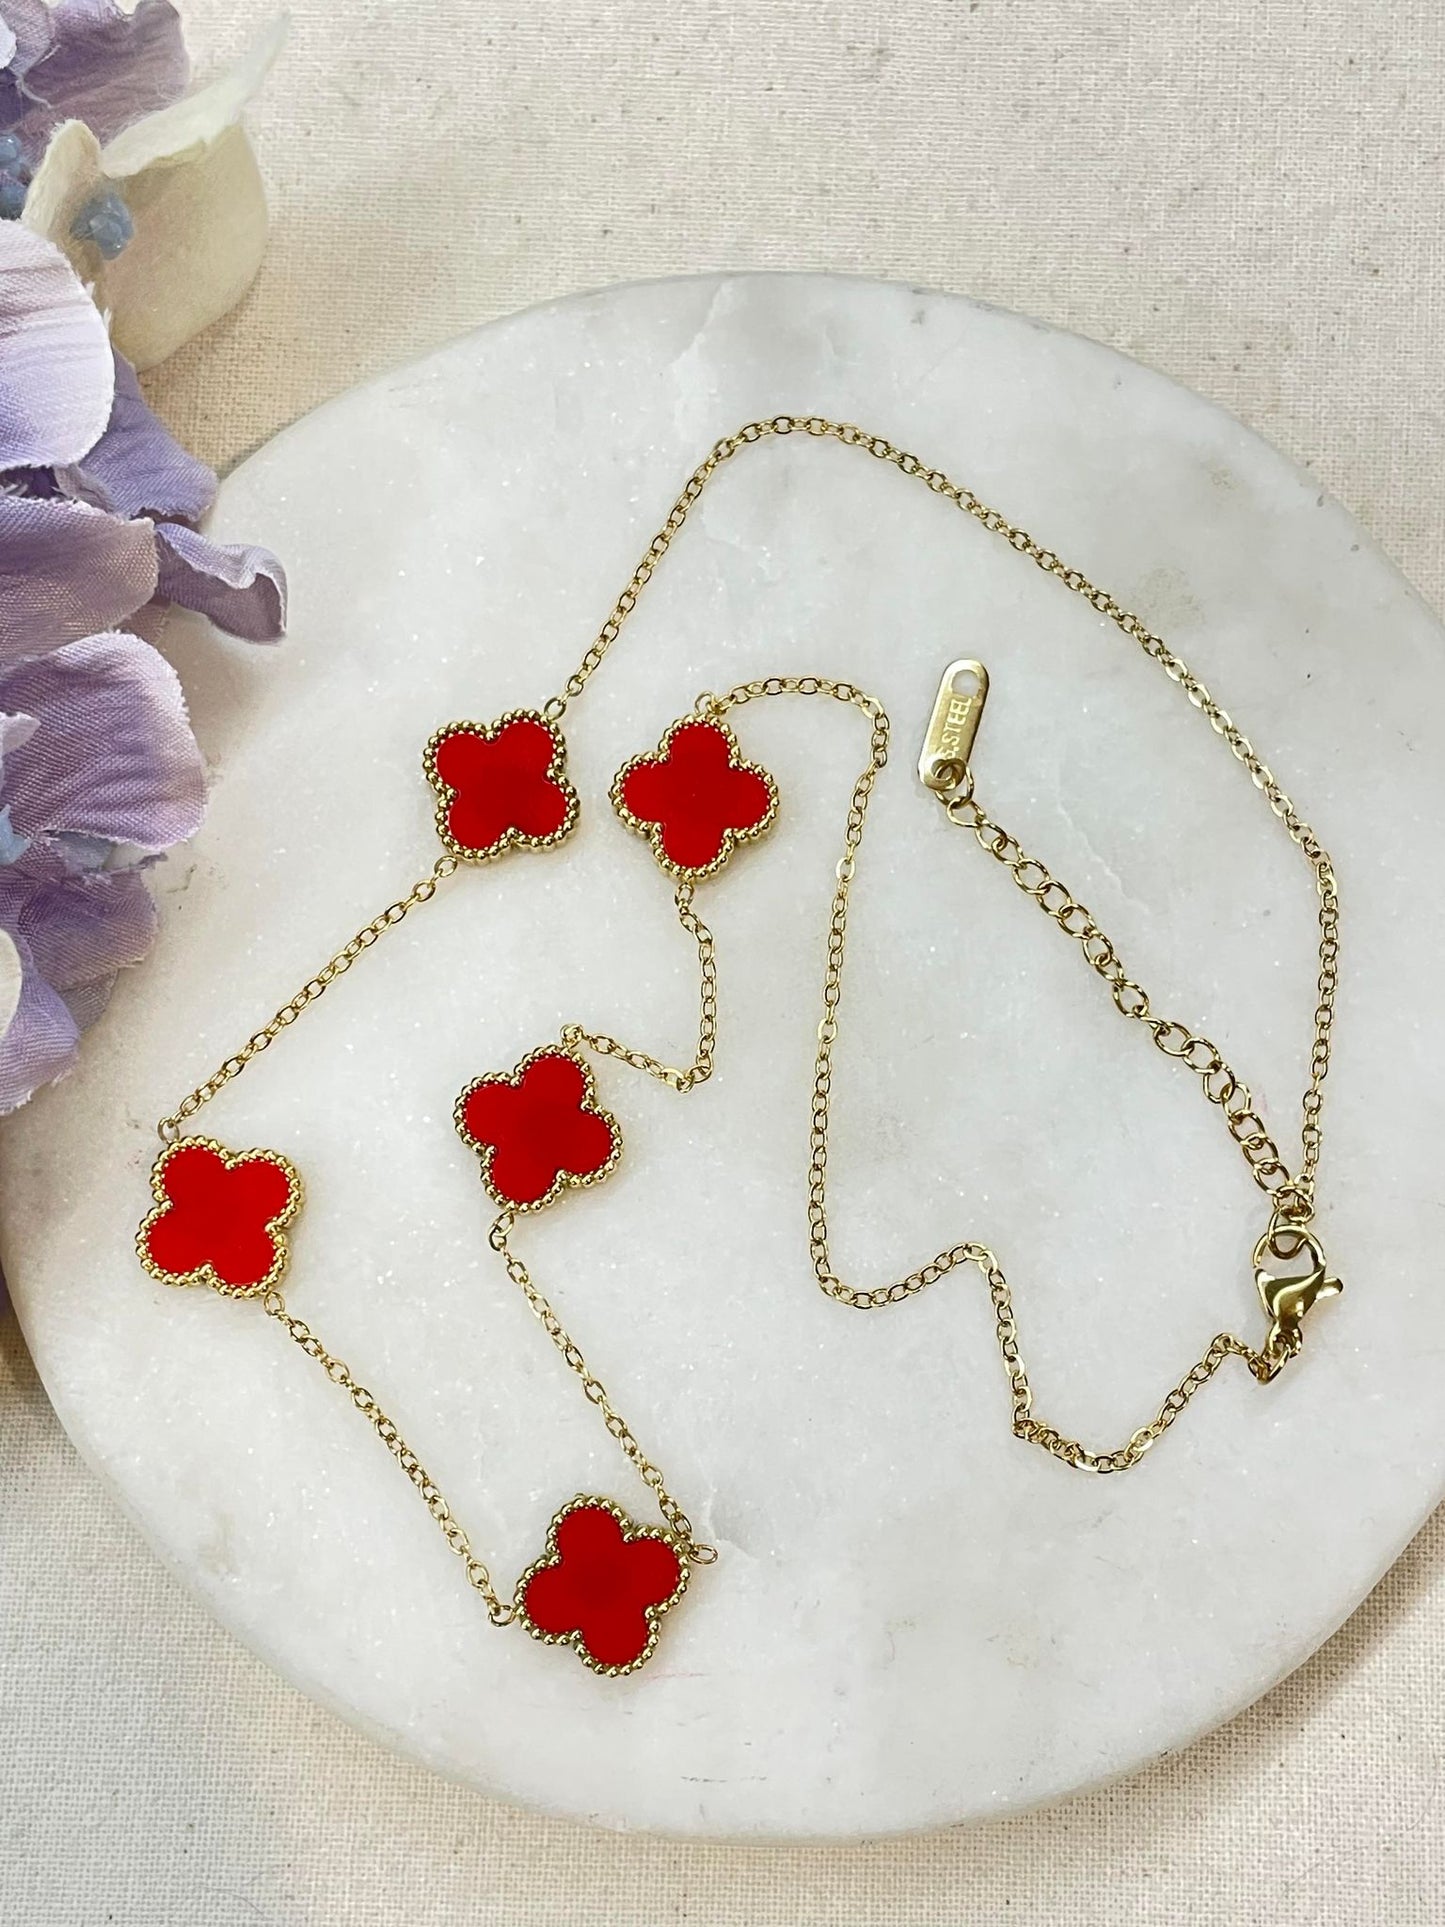 Four leaf clover necklace - red